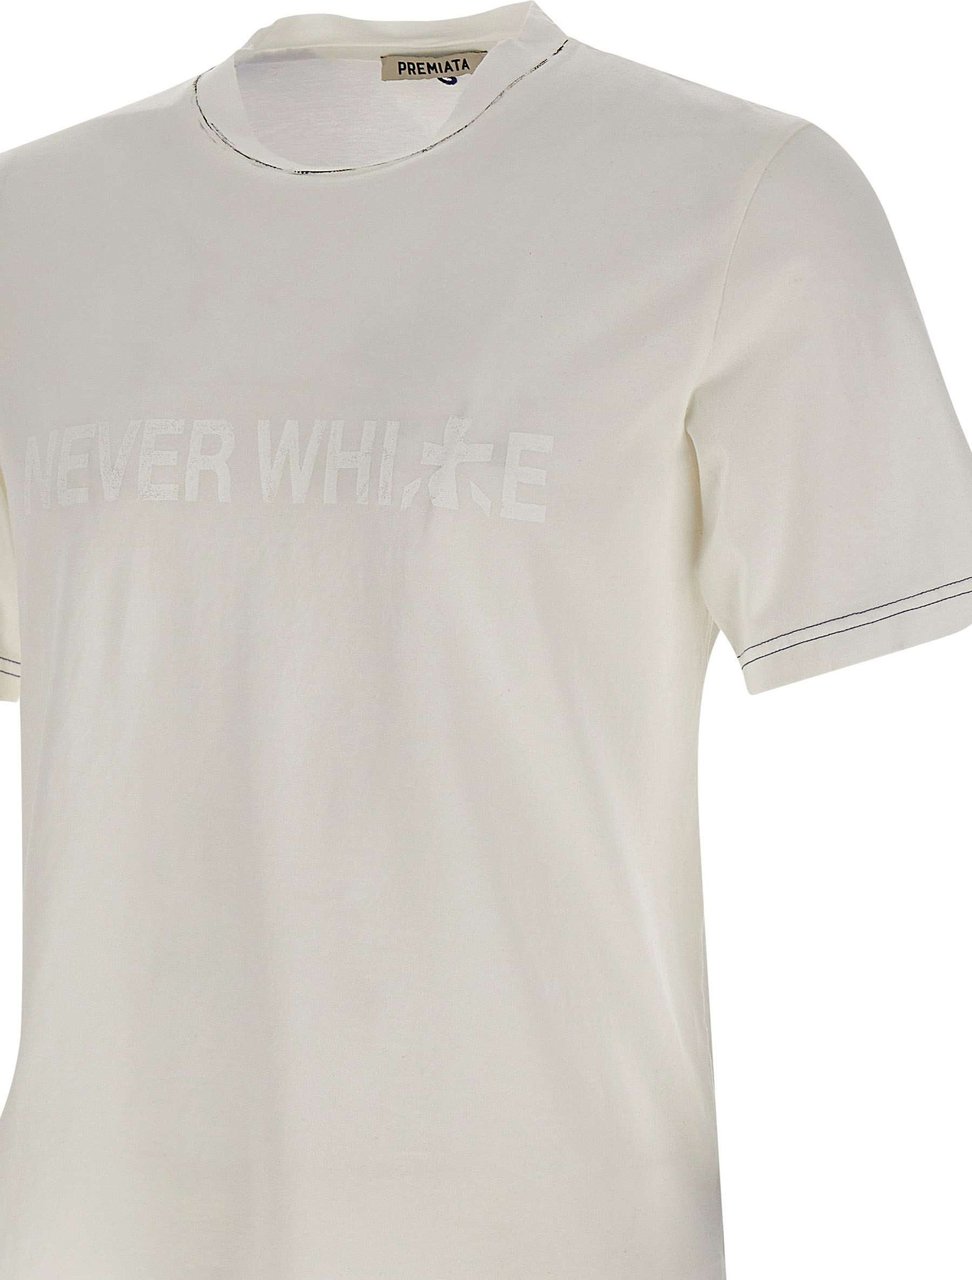 Premiata Athens White T-shirt White Wit